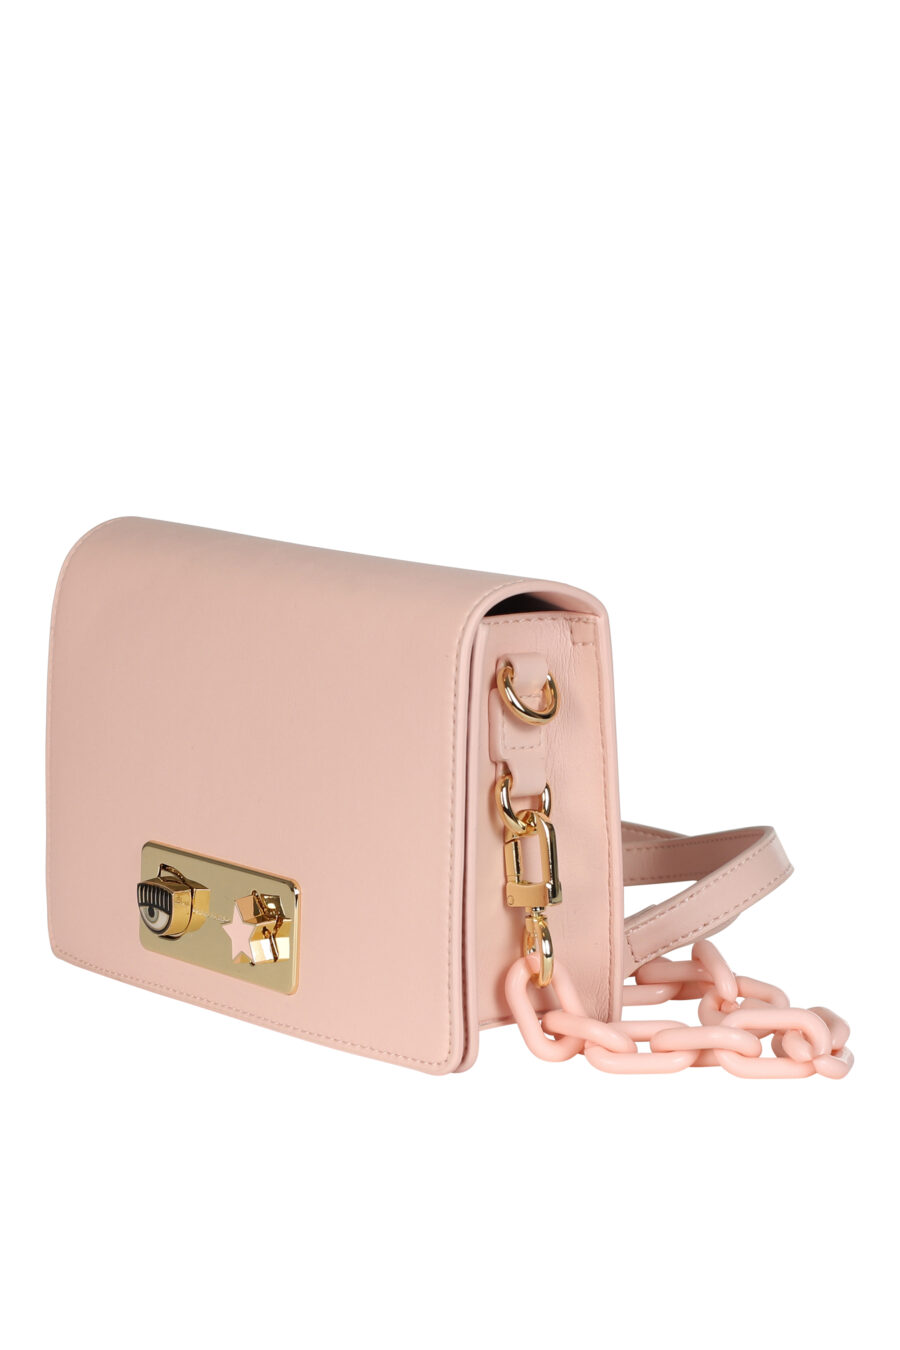 Pastel pink shoulder bag with eye lock and metal star - 8052672427700 2